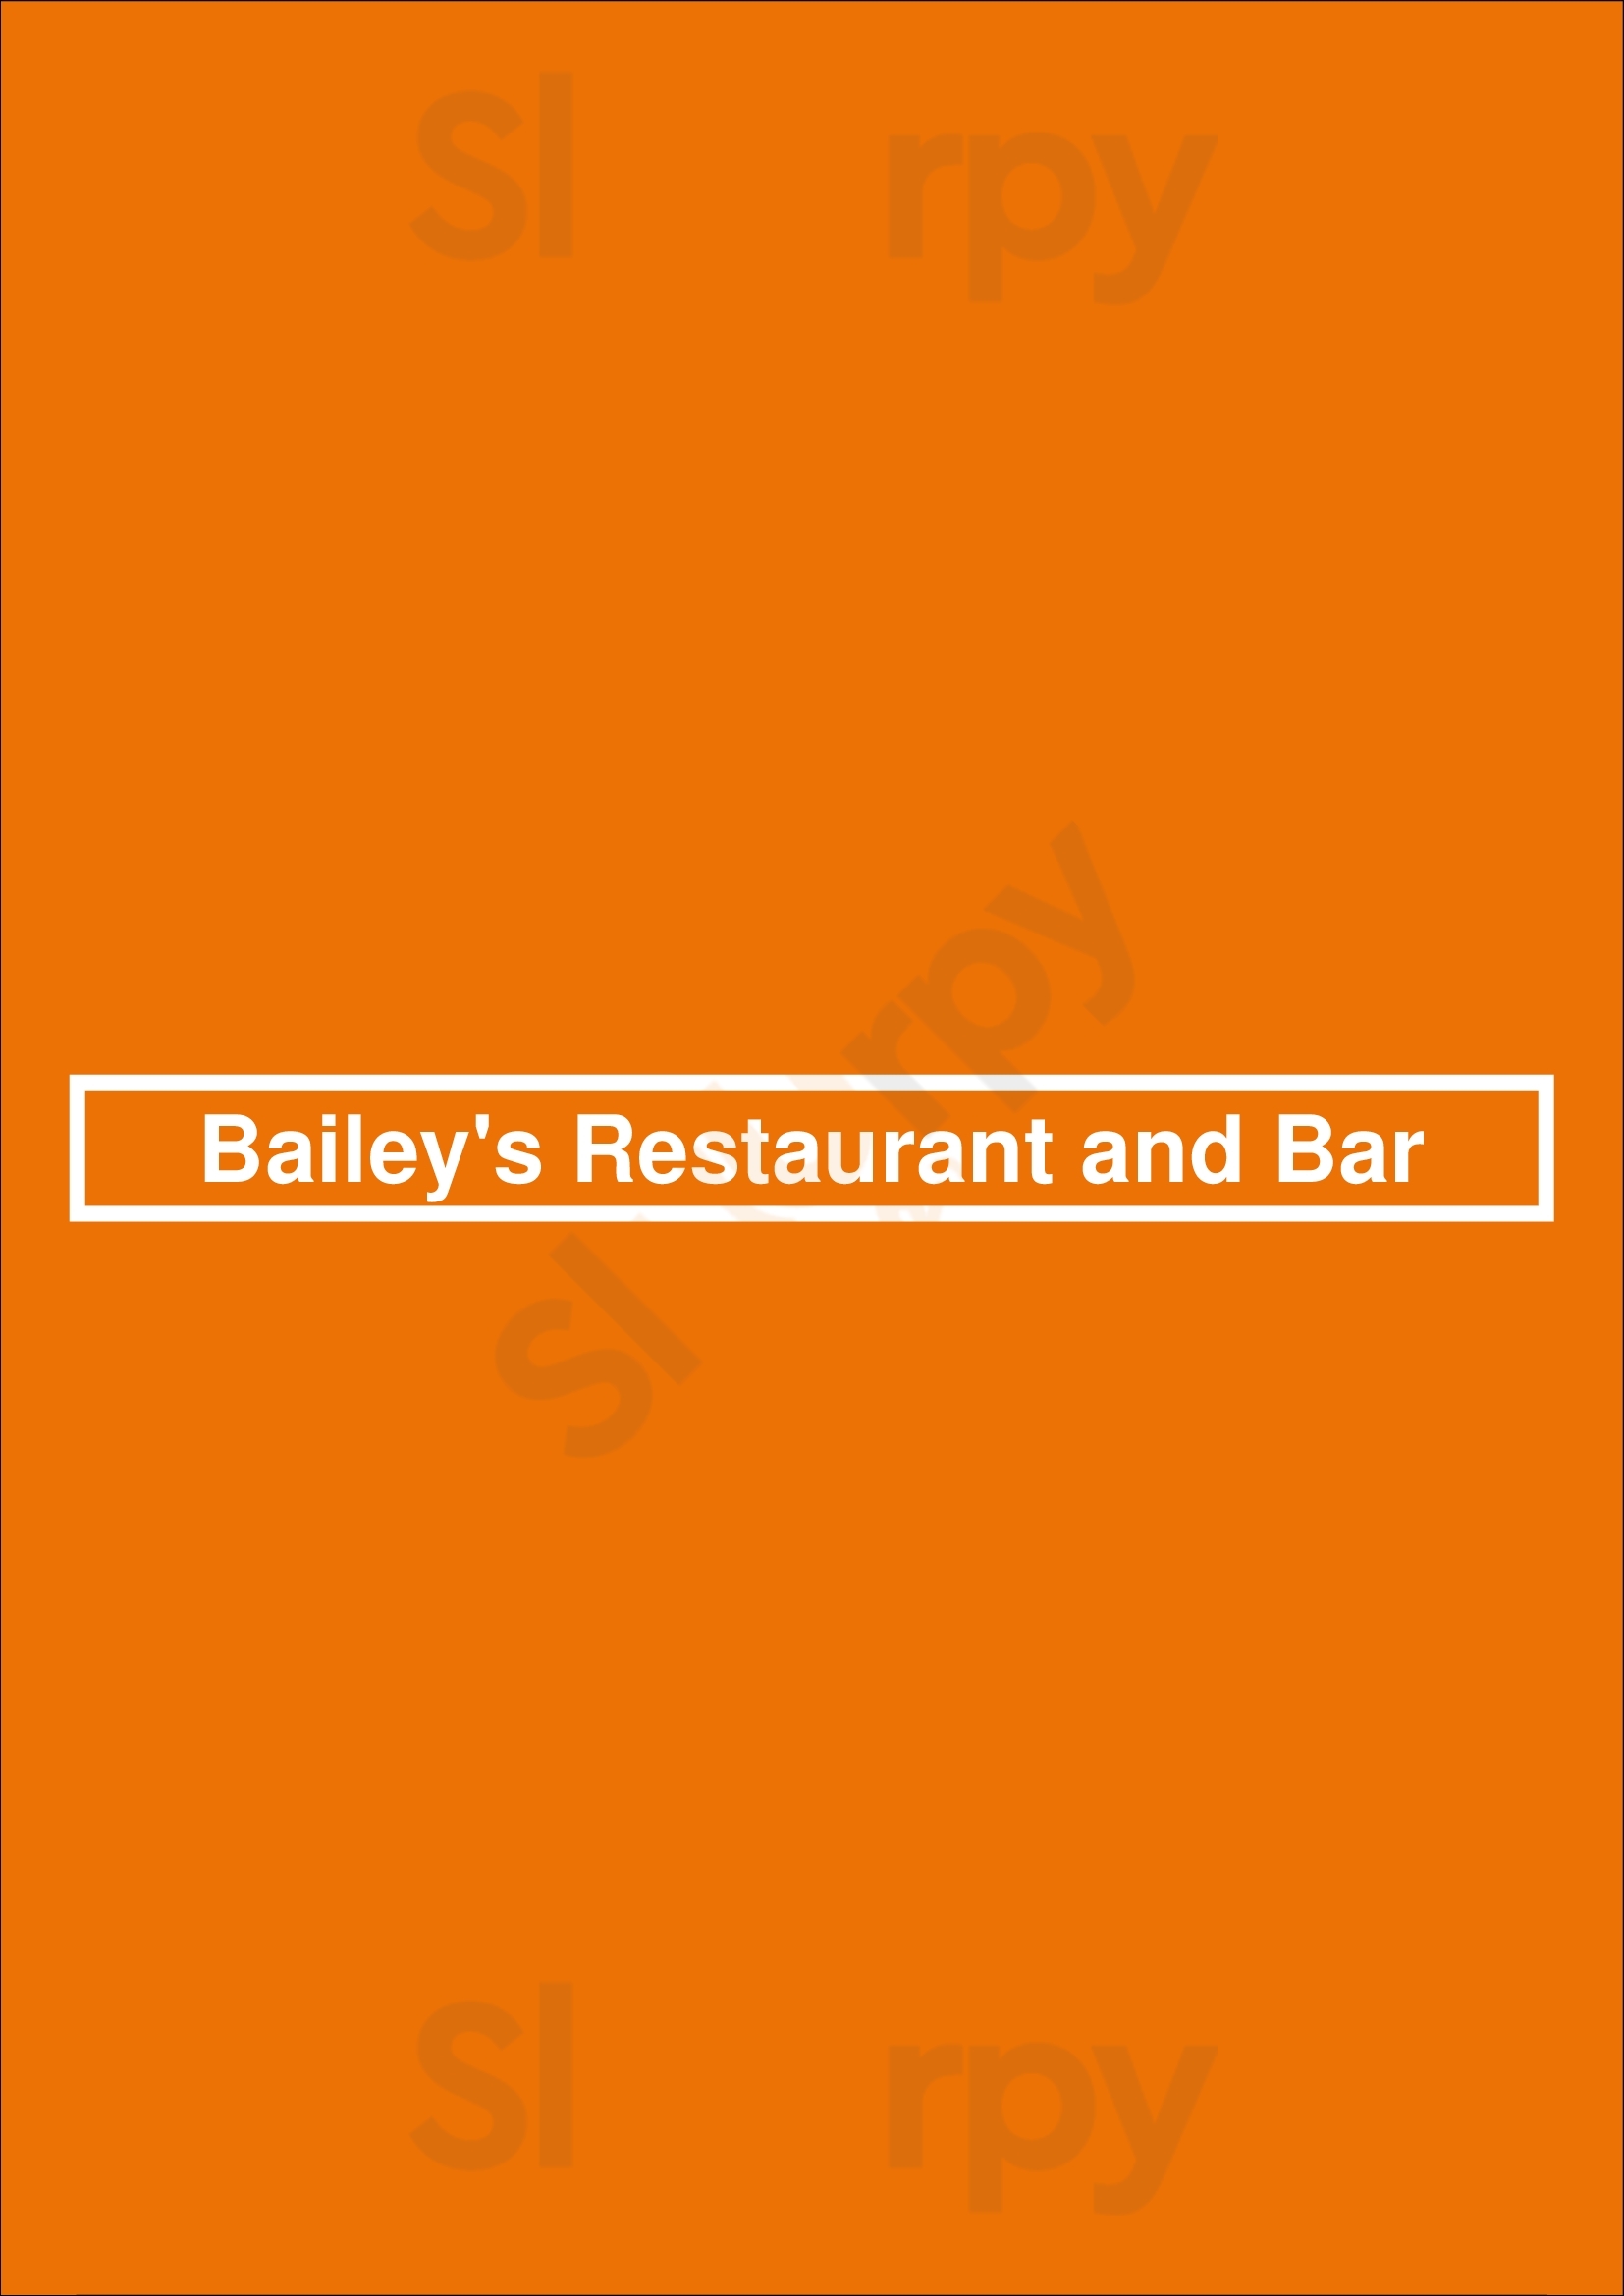 Bailey's Corner Pub Zion Menu - 1